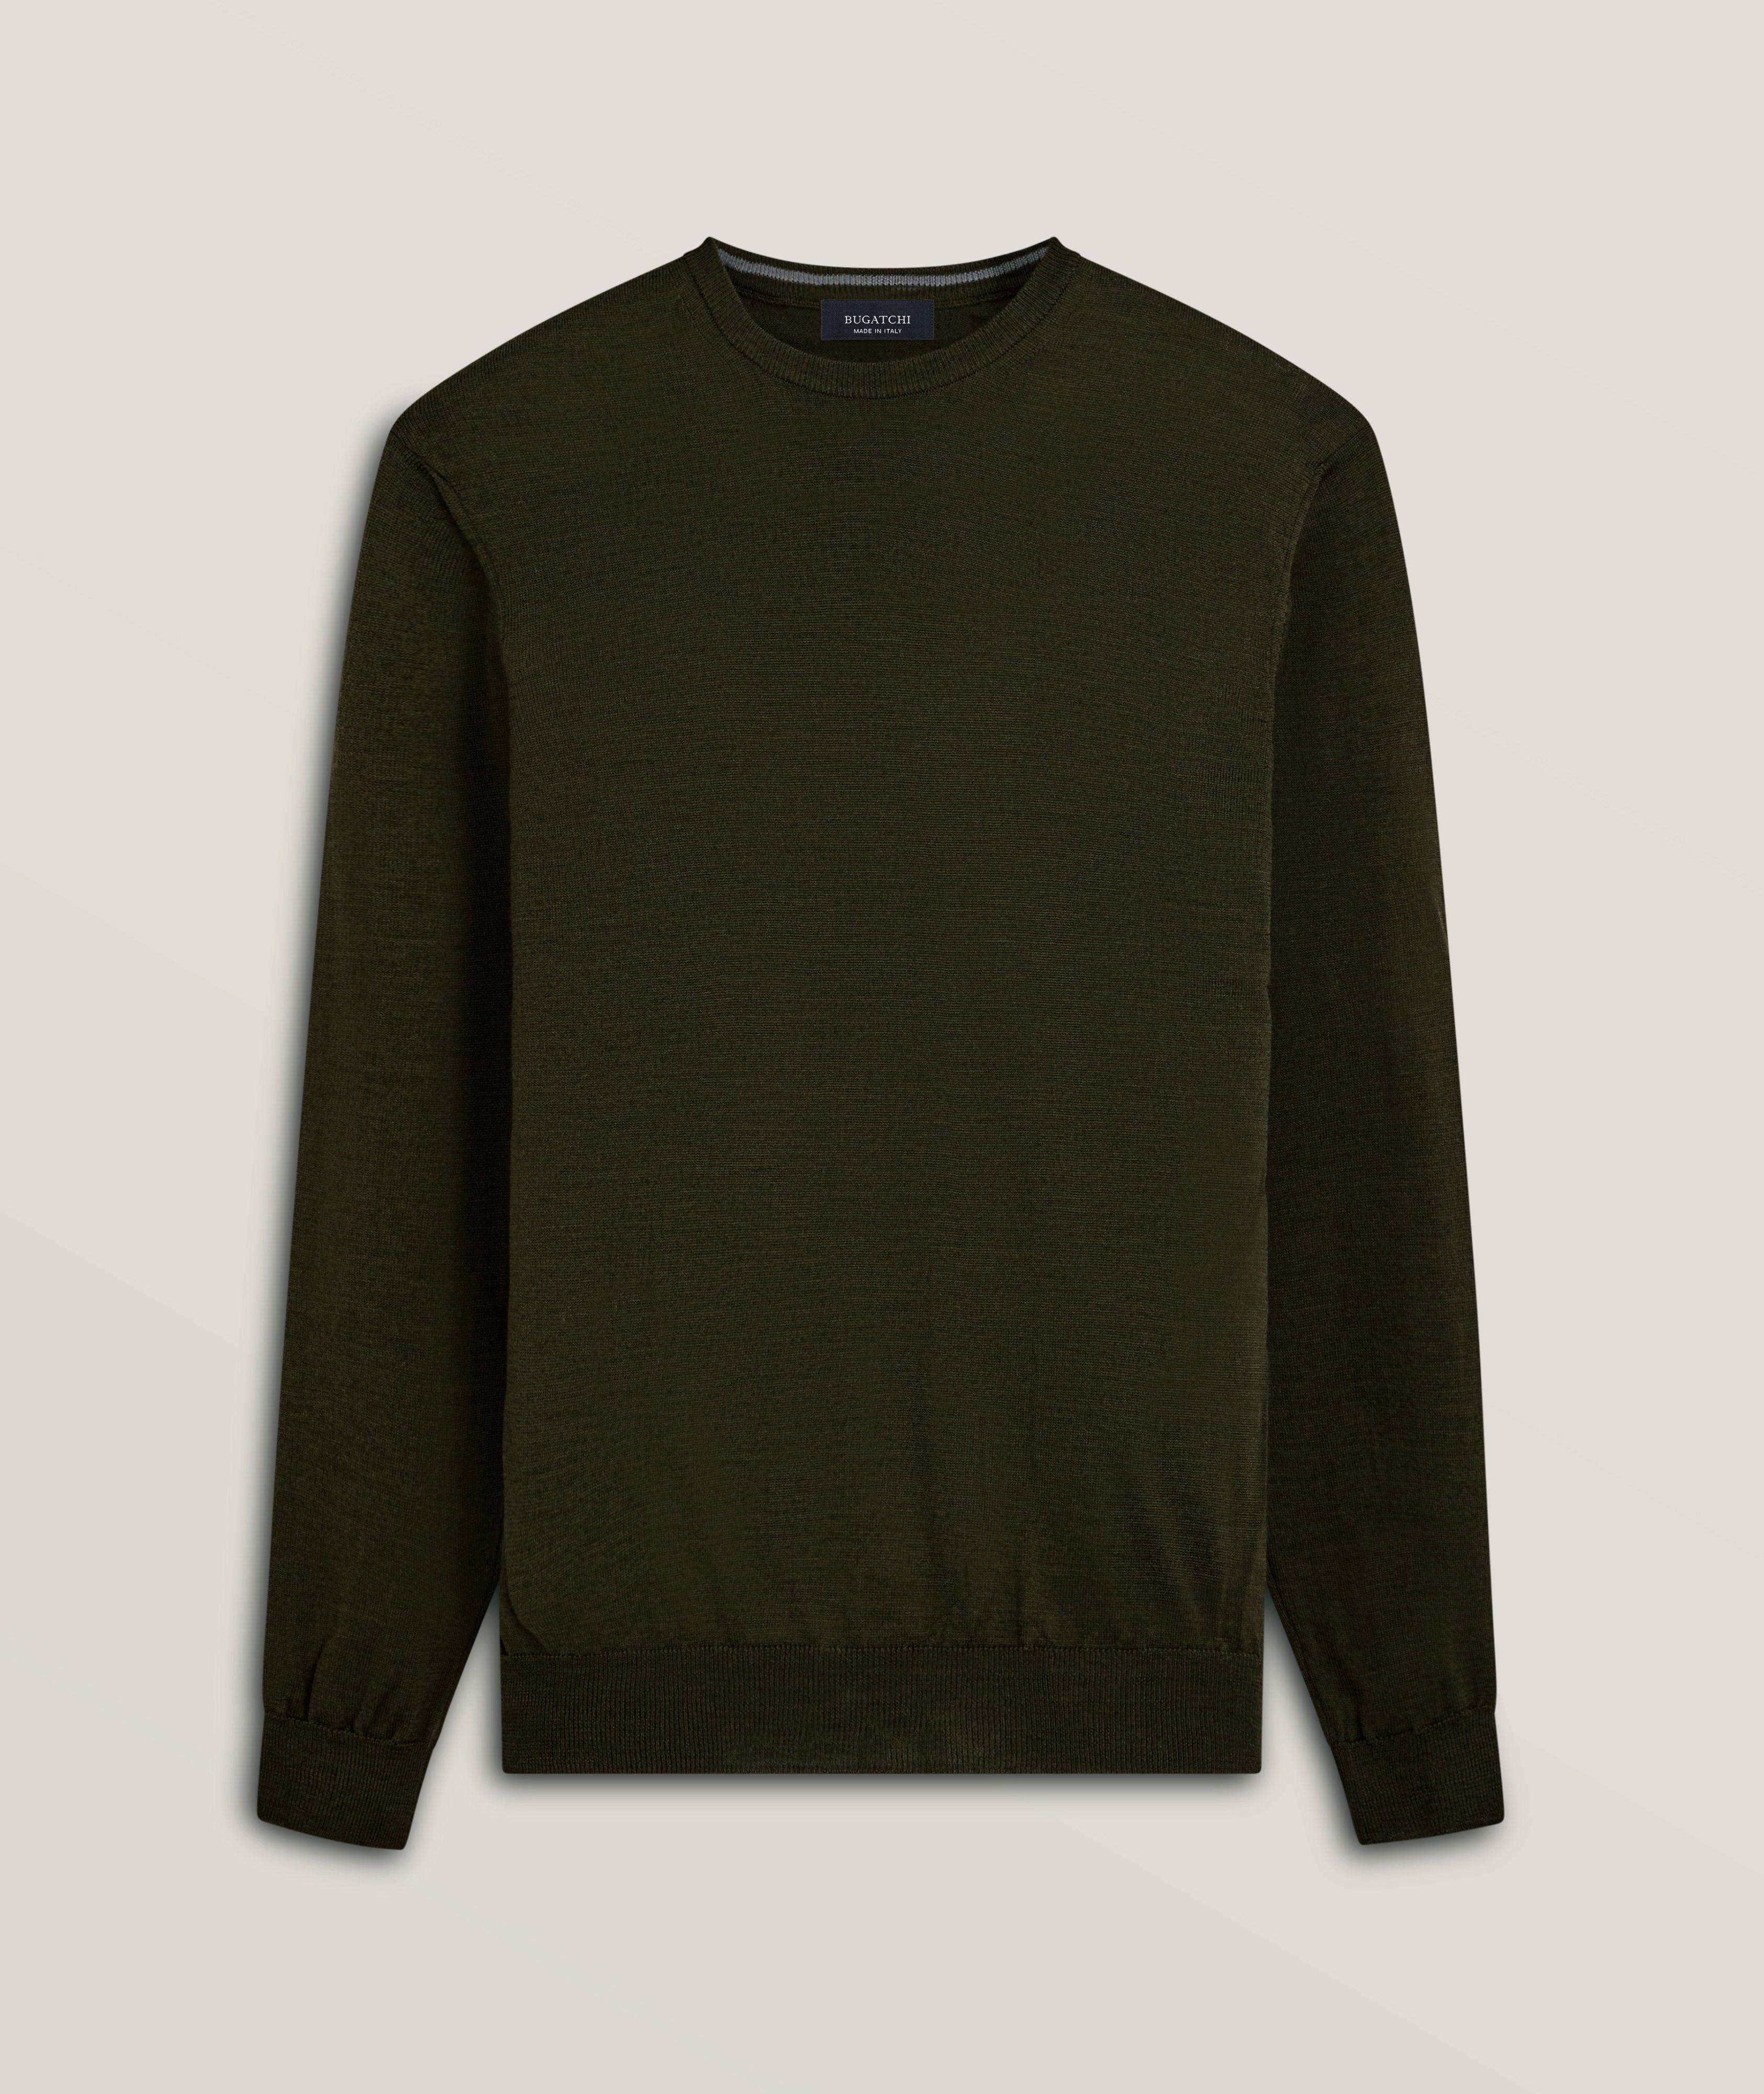 Super Merino Wool Crewneck Sweater image 0